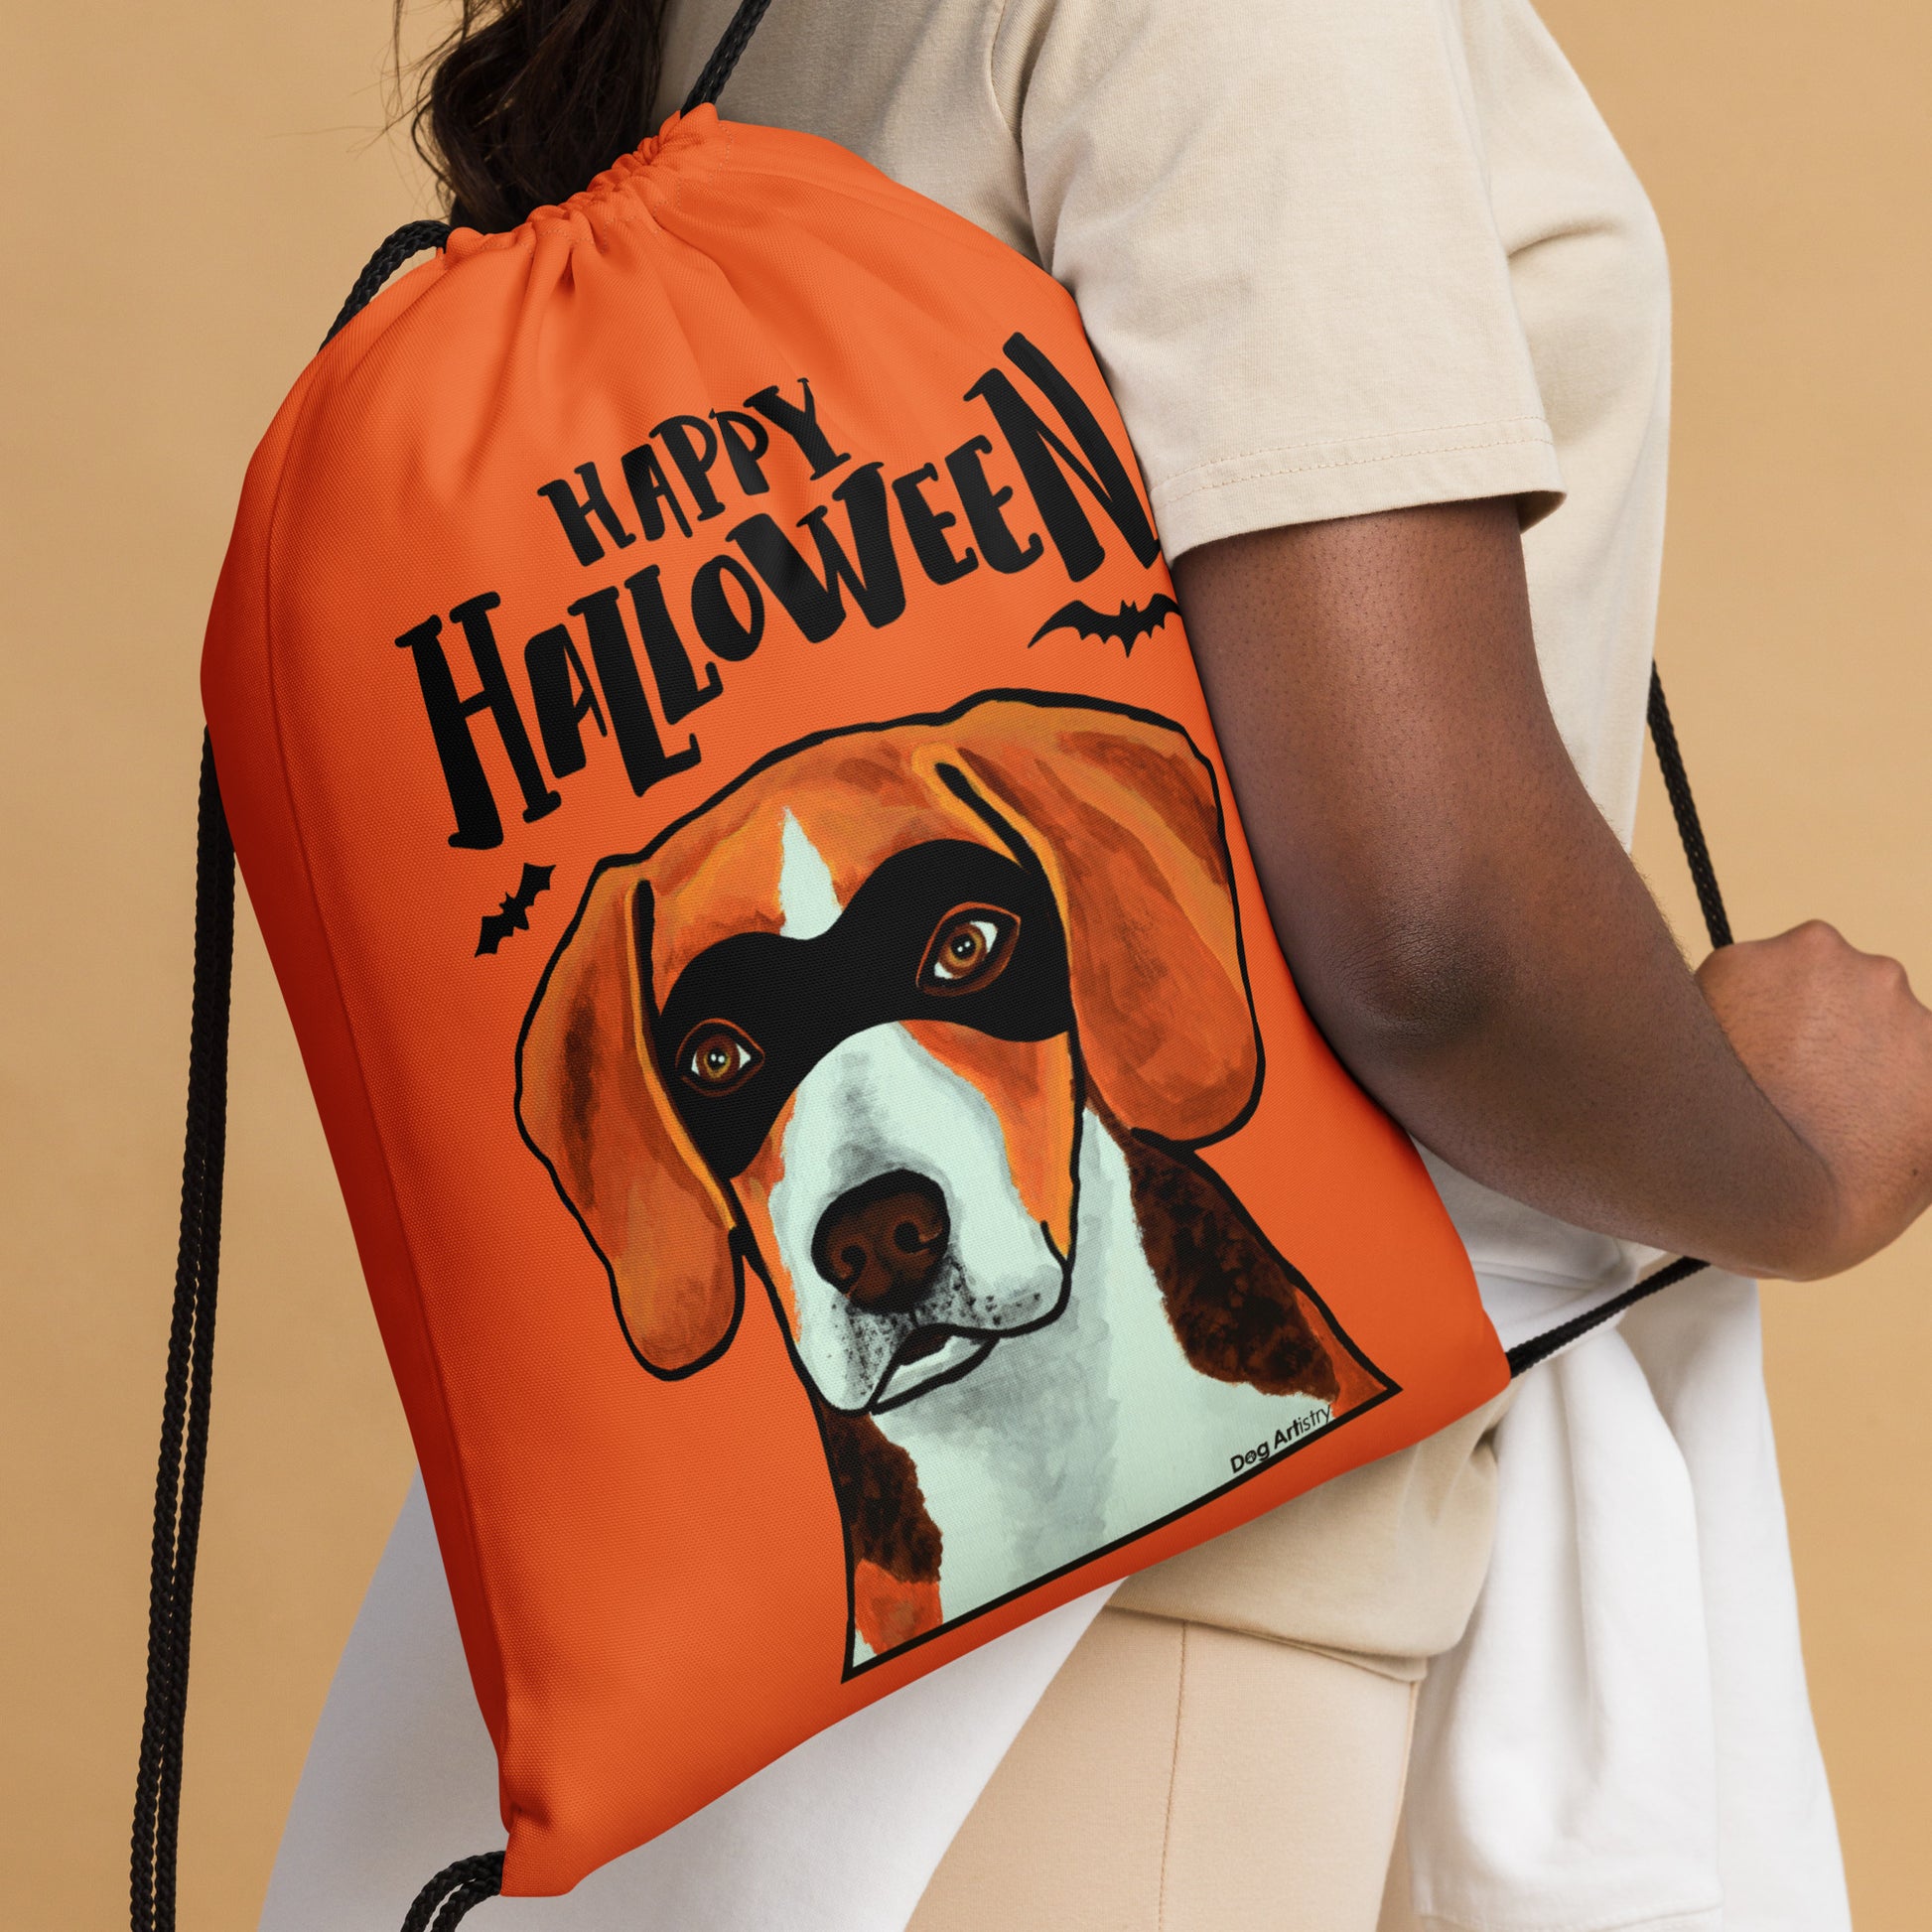 Happy Halloween Beagle wearing mask drawstring bag by Dog Artistry Halloween candy bag closeup